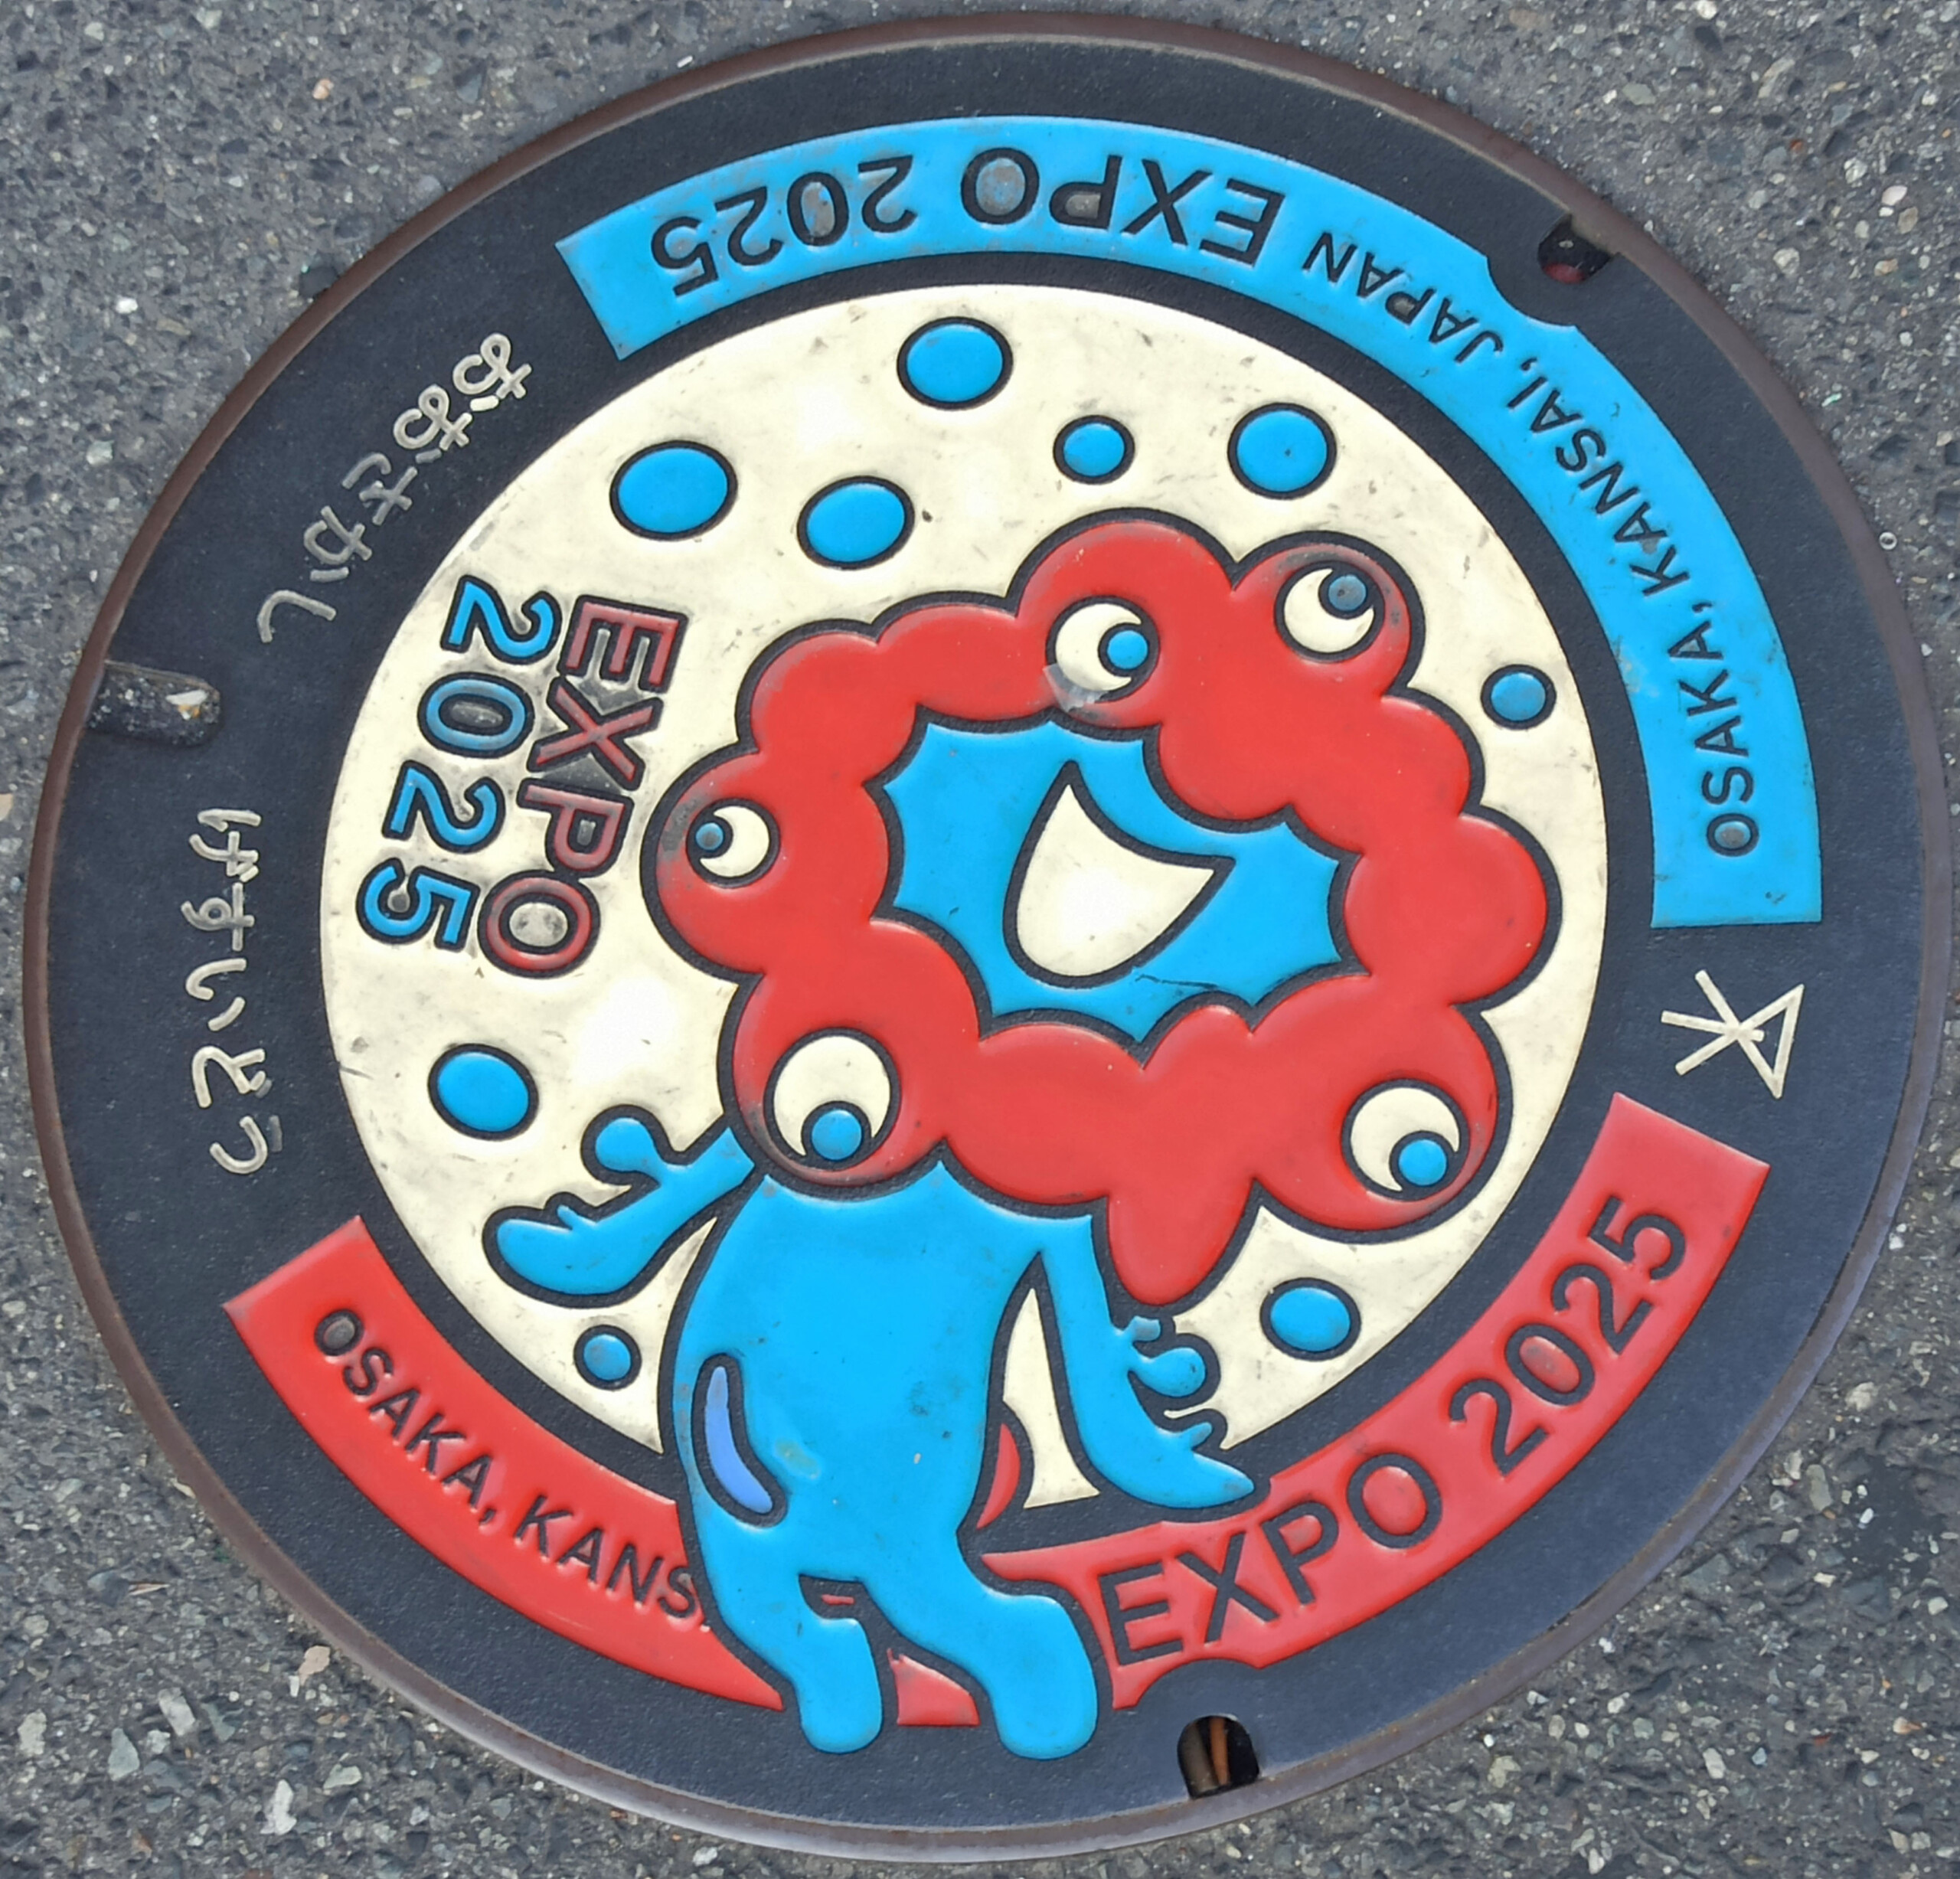 Osaka World Expo 2025 Sewer Cover, Japan